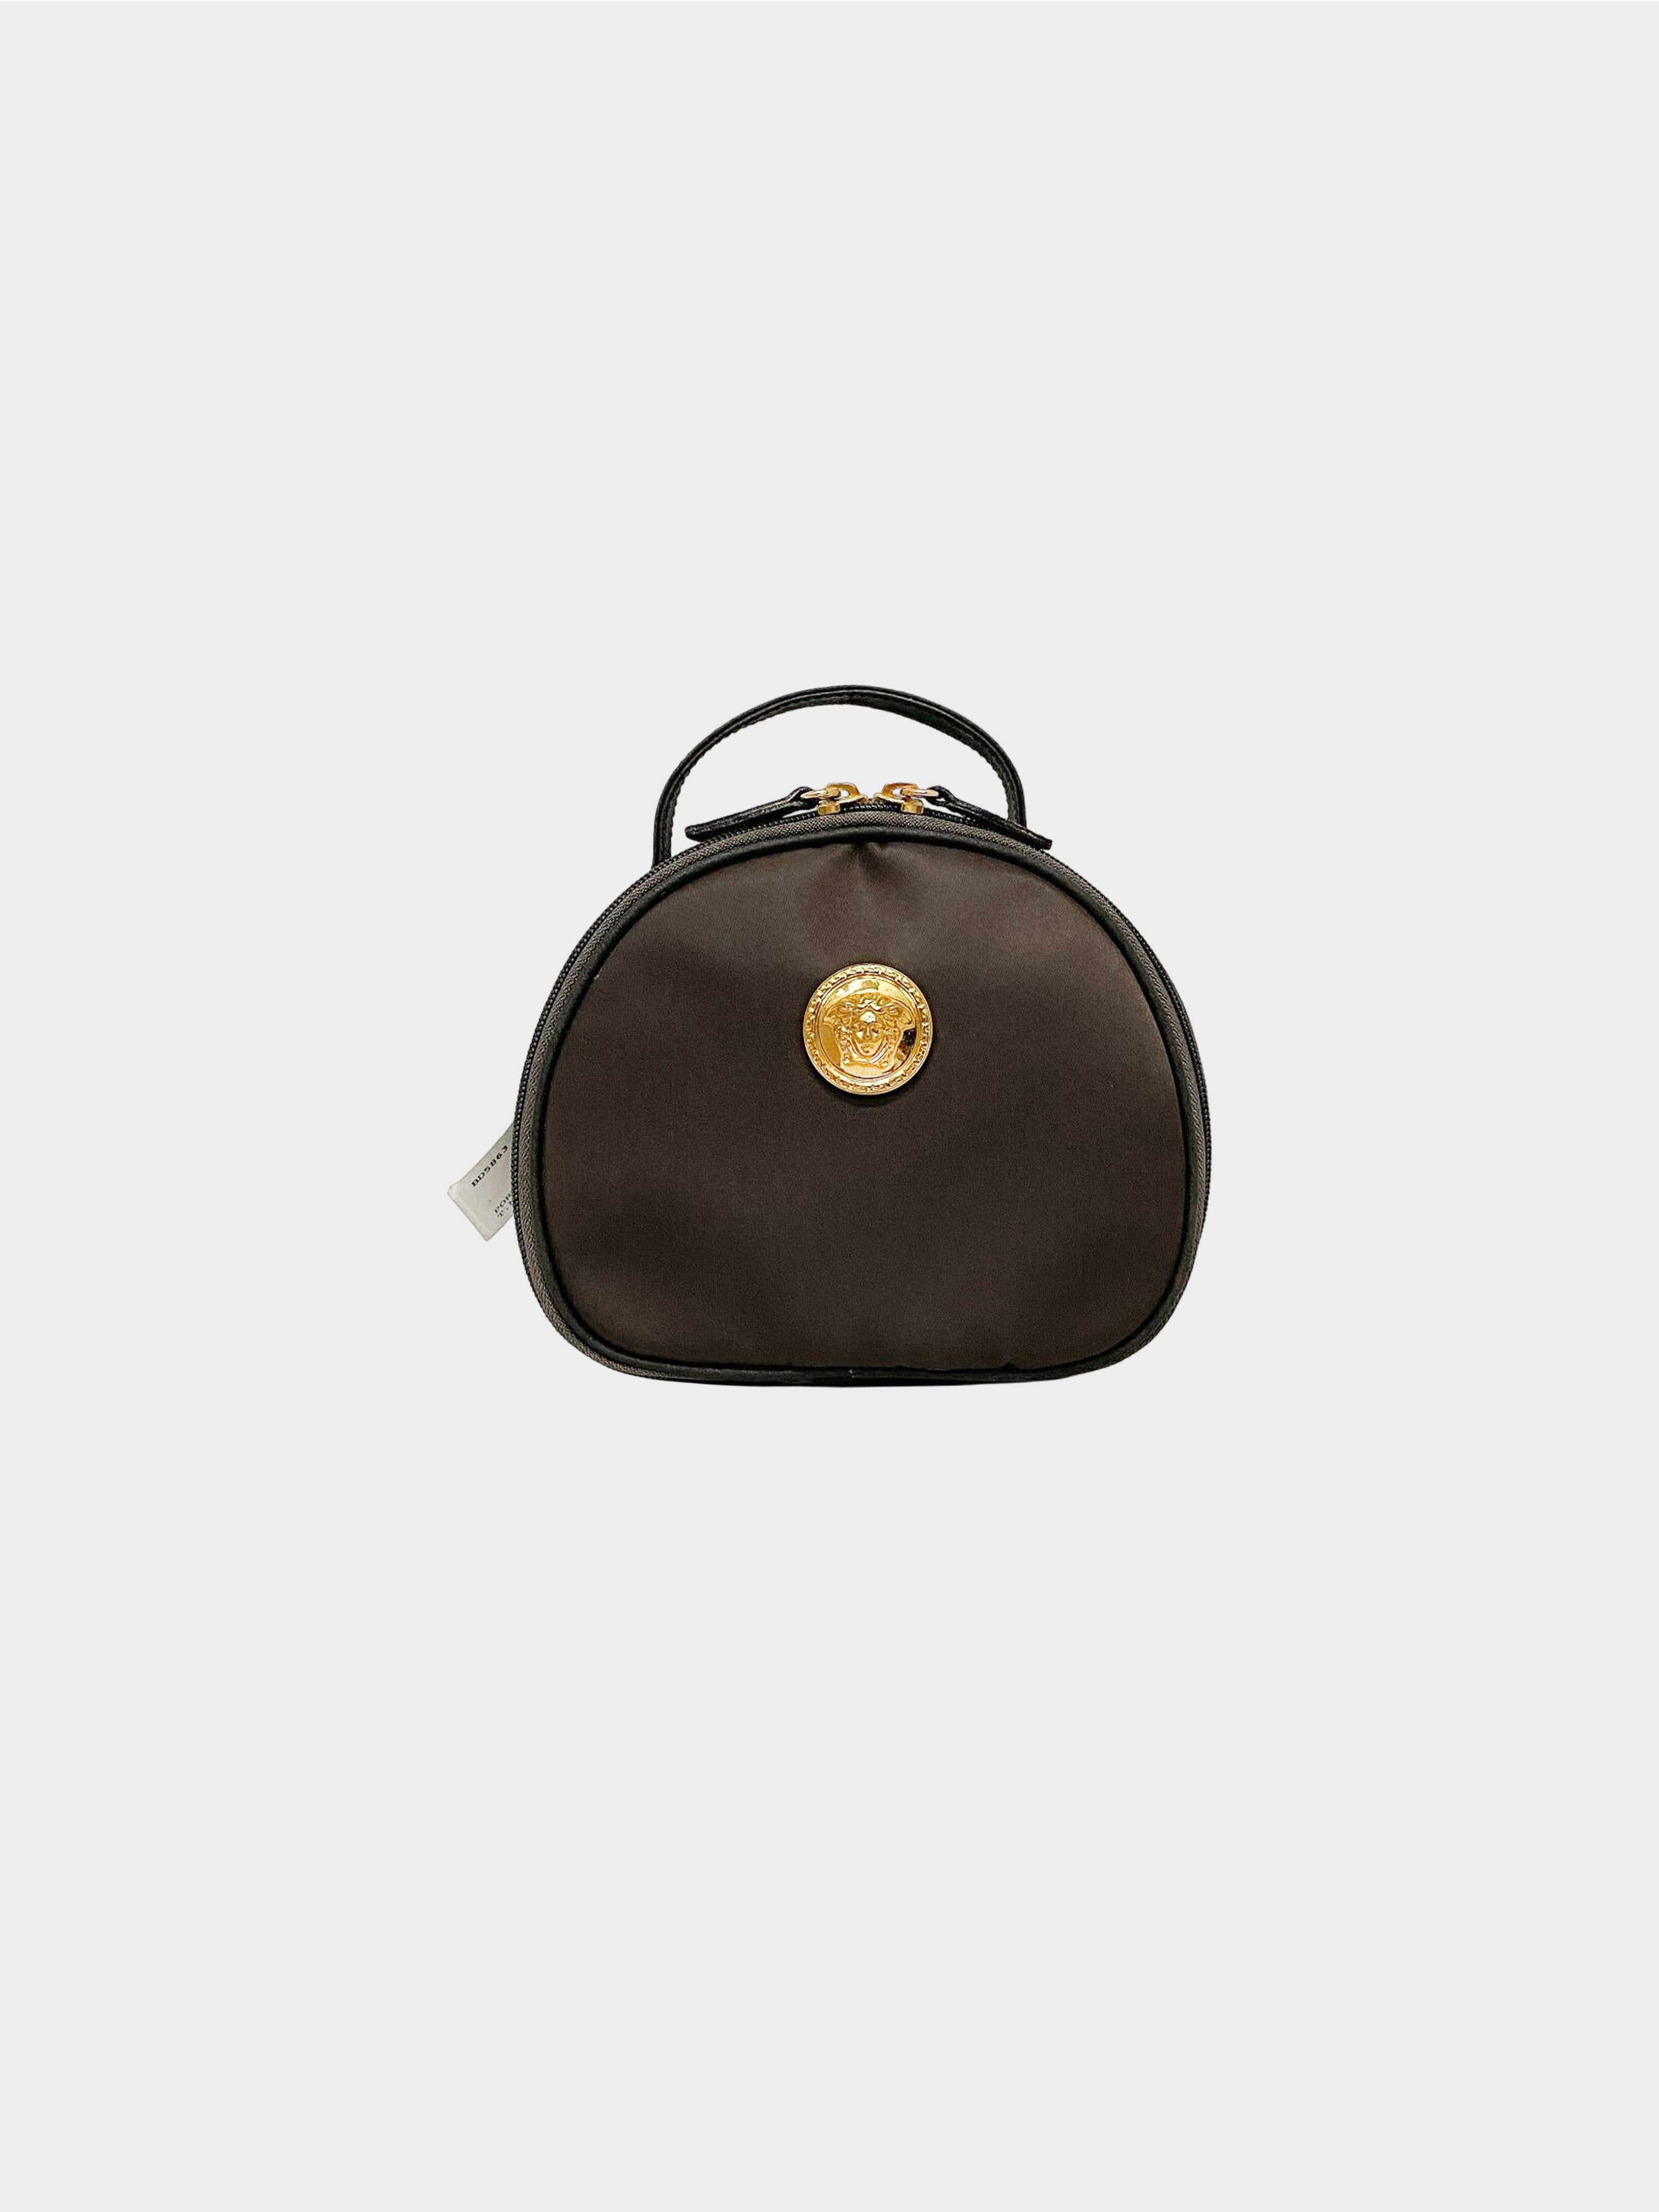 Gianni Versace 2000s Brown Medusa Head Mini Handbag